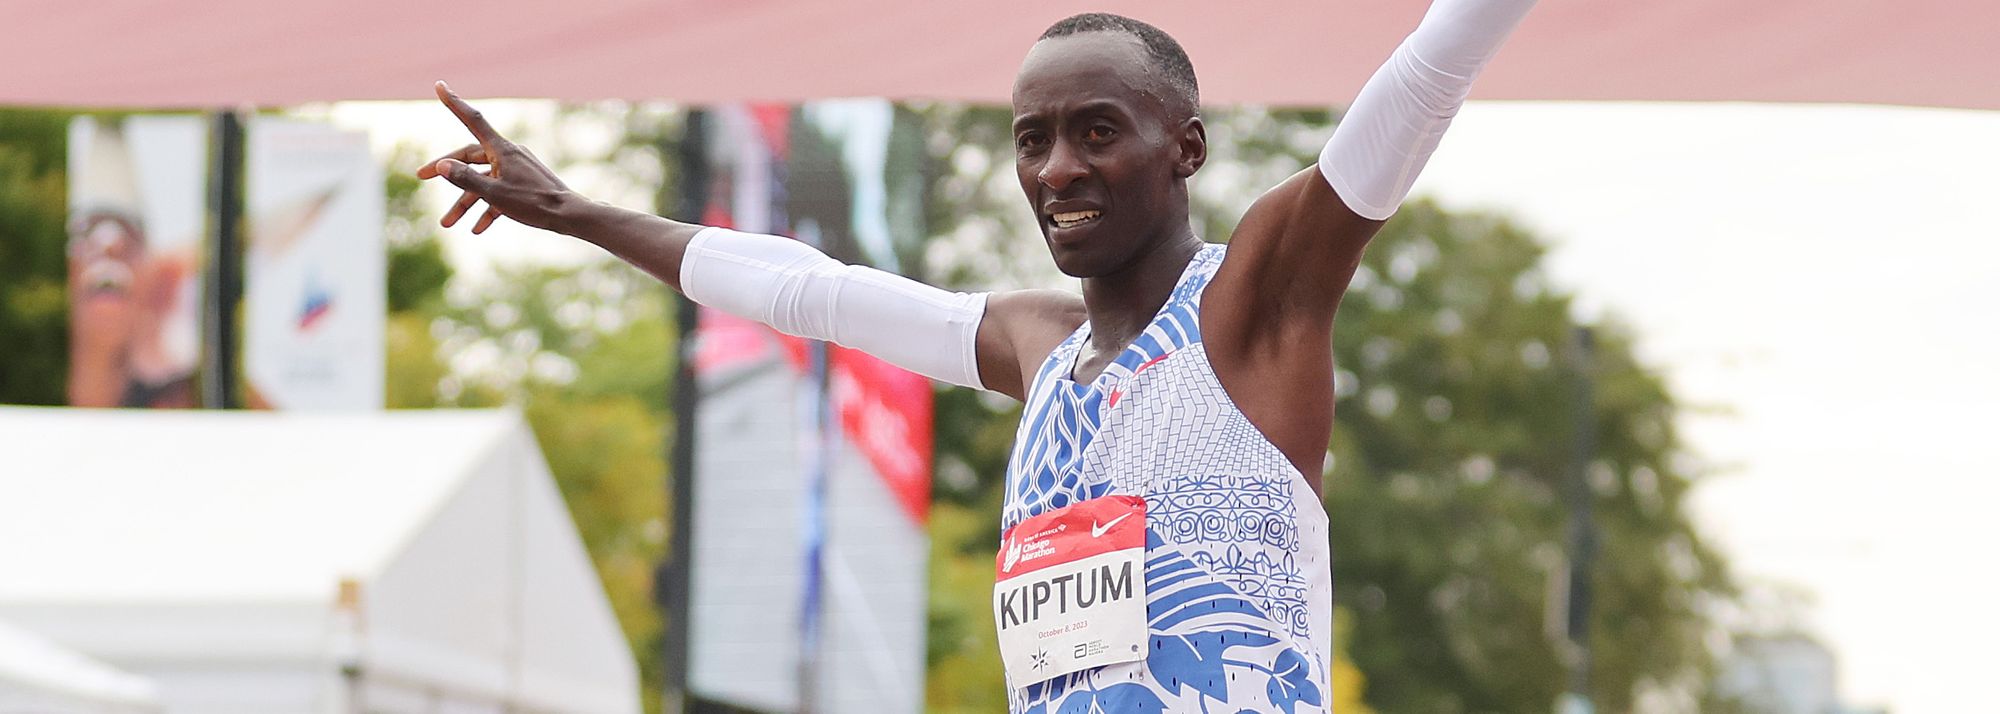 Kelvin Kiptum’s world marathon record of 2:00:35 set in Chicago last year has been ratified